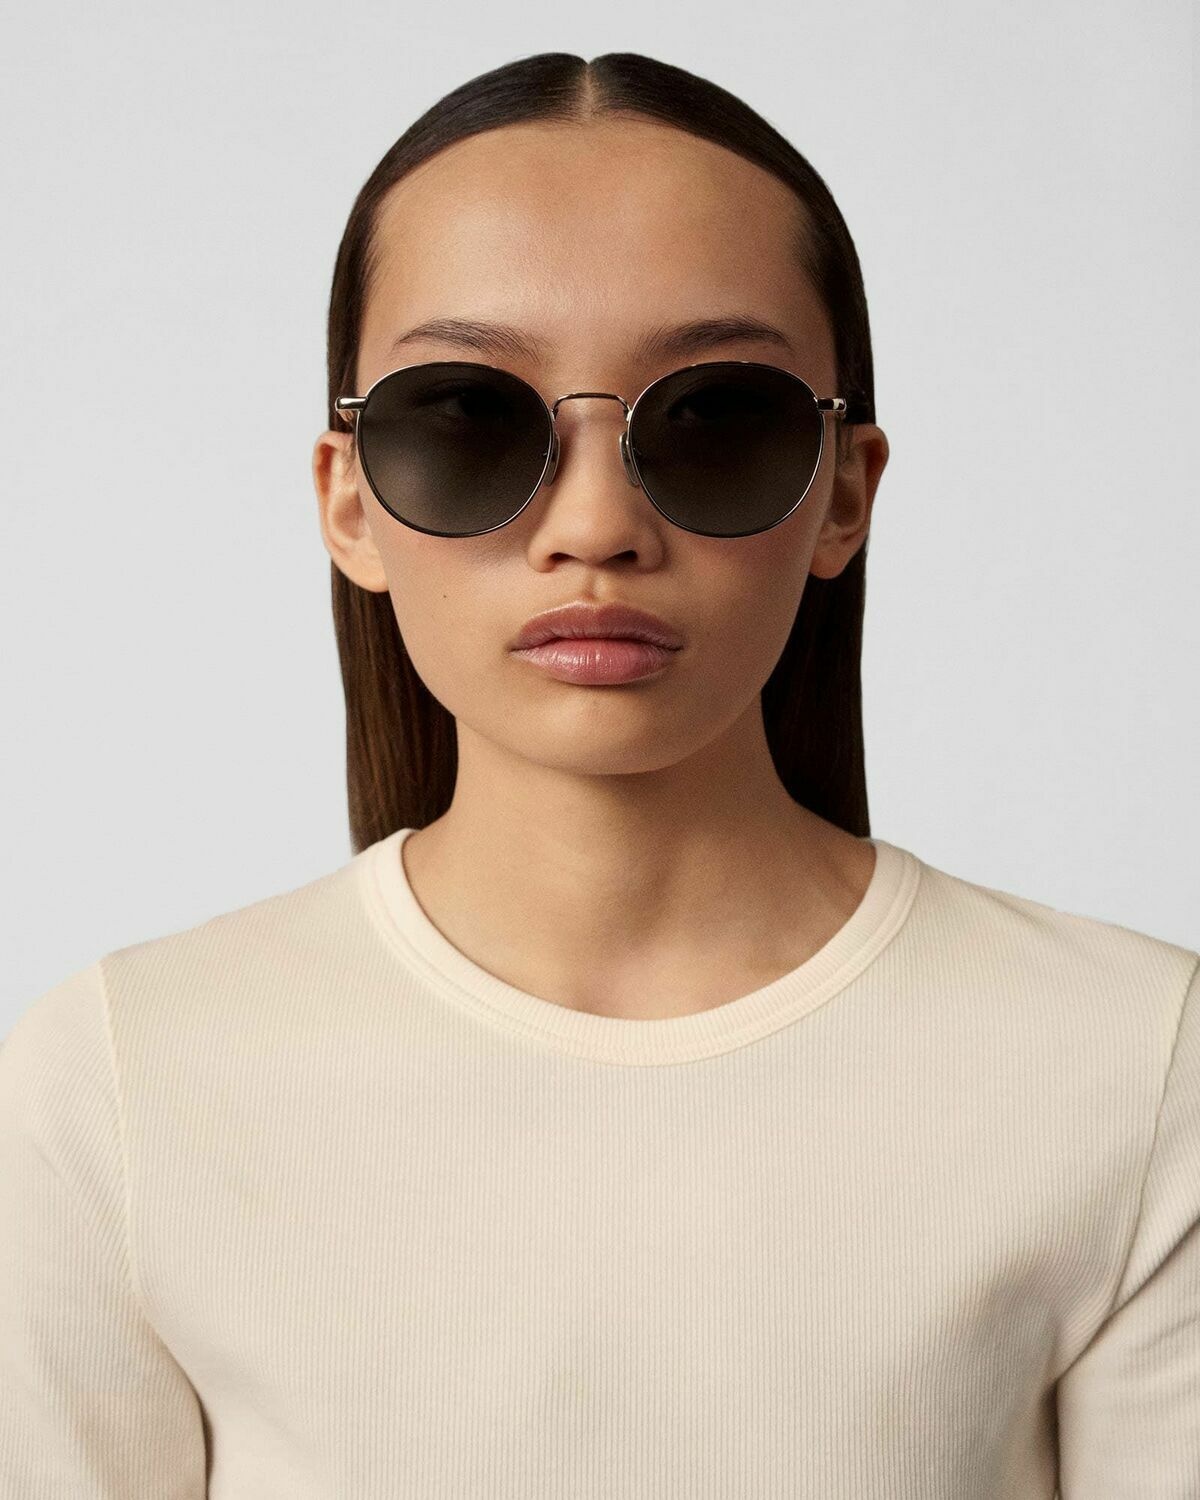 Chimi Eyewear Round Grey P Sunglasses Grey - Mens - Eyewear